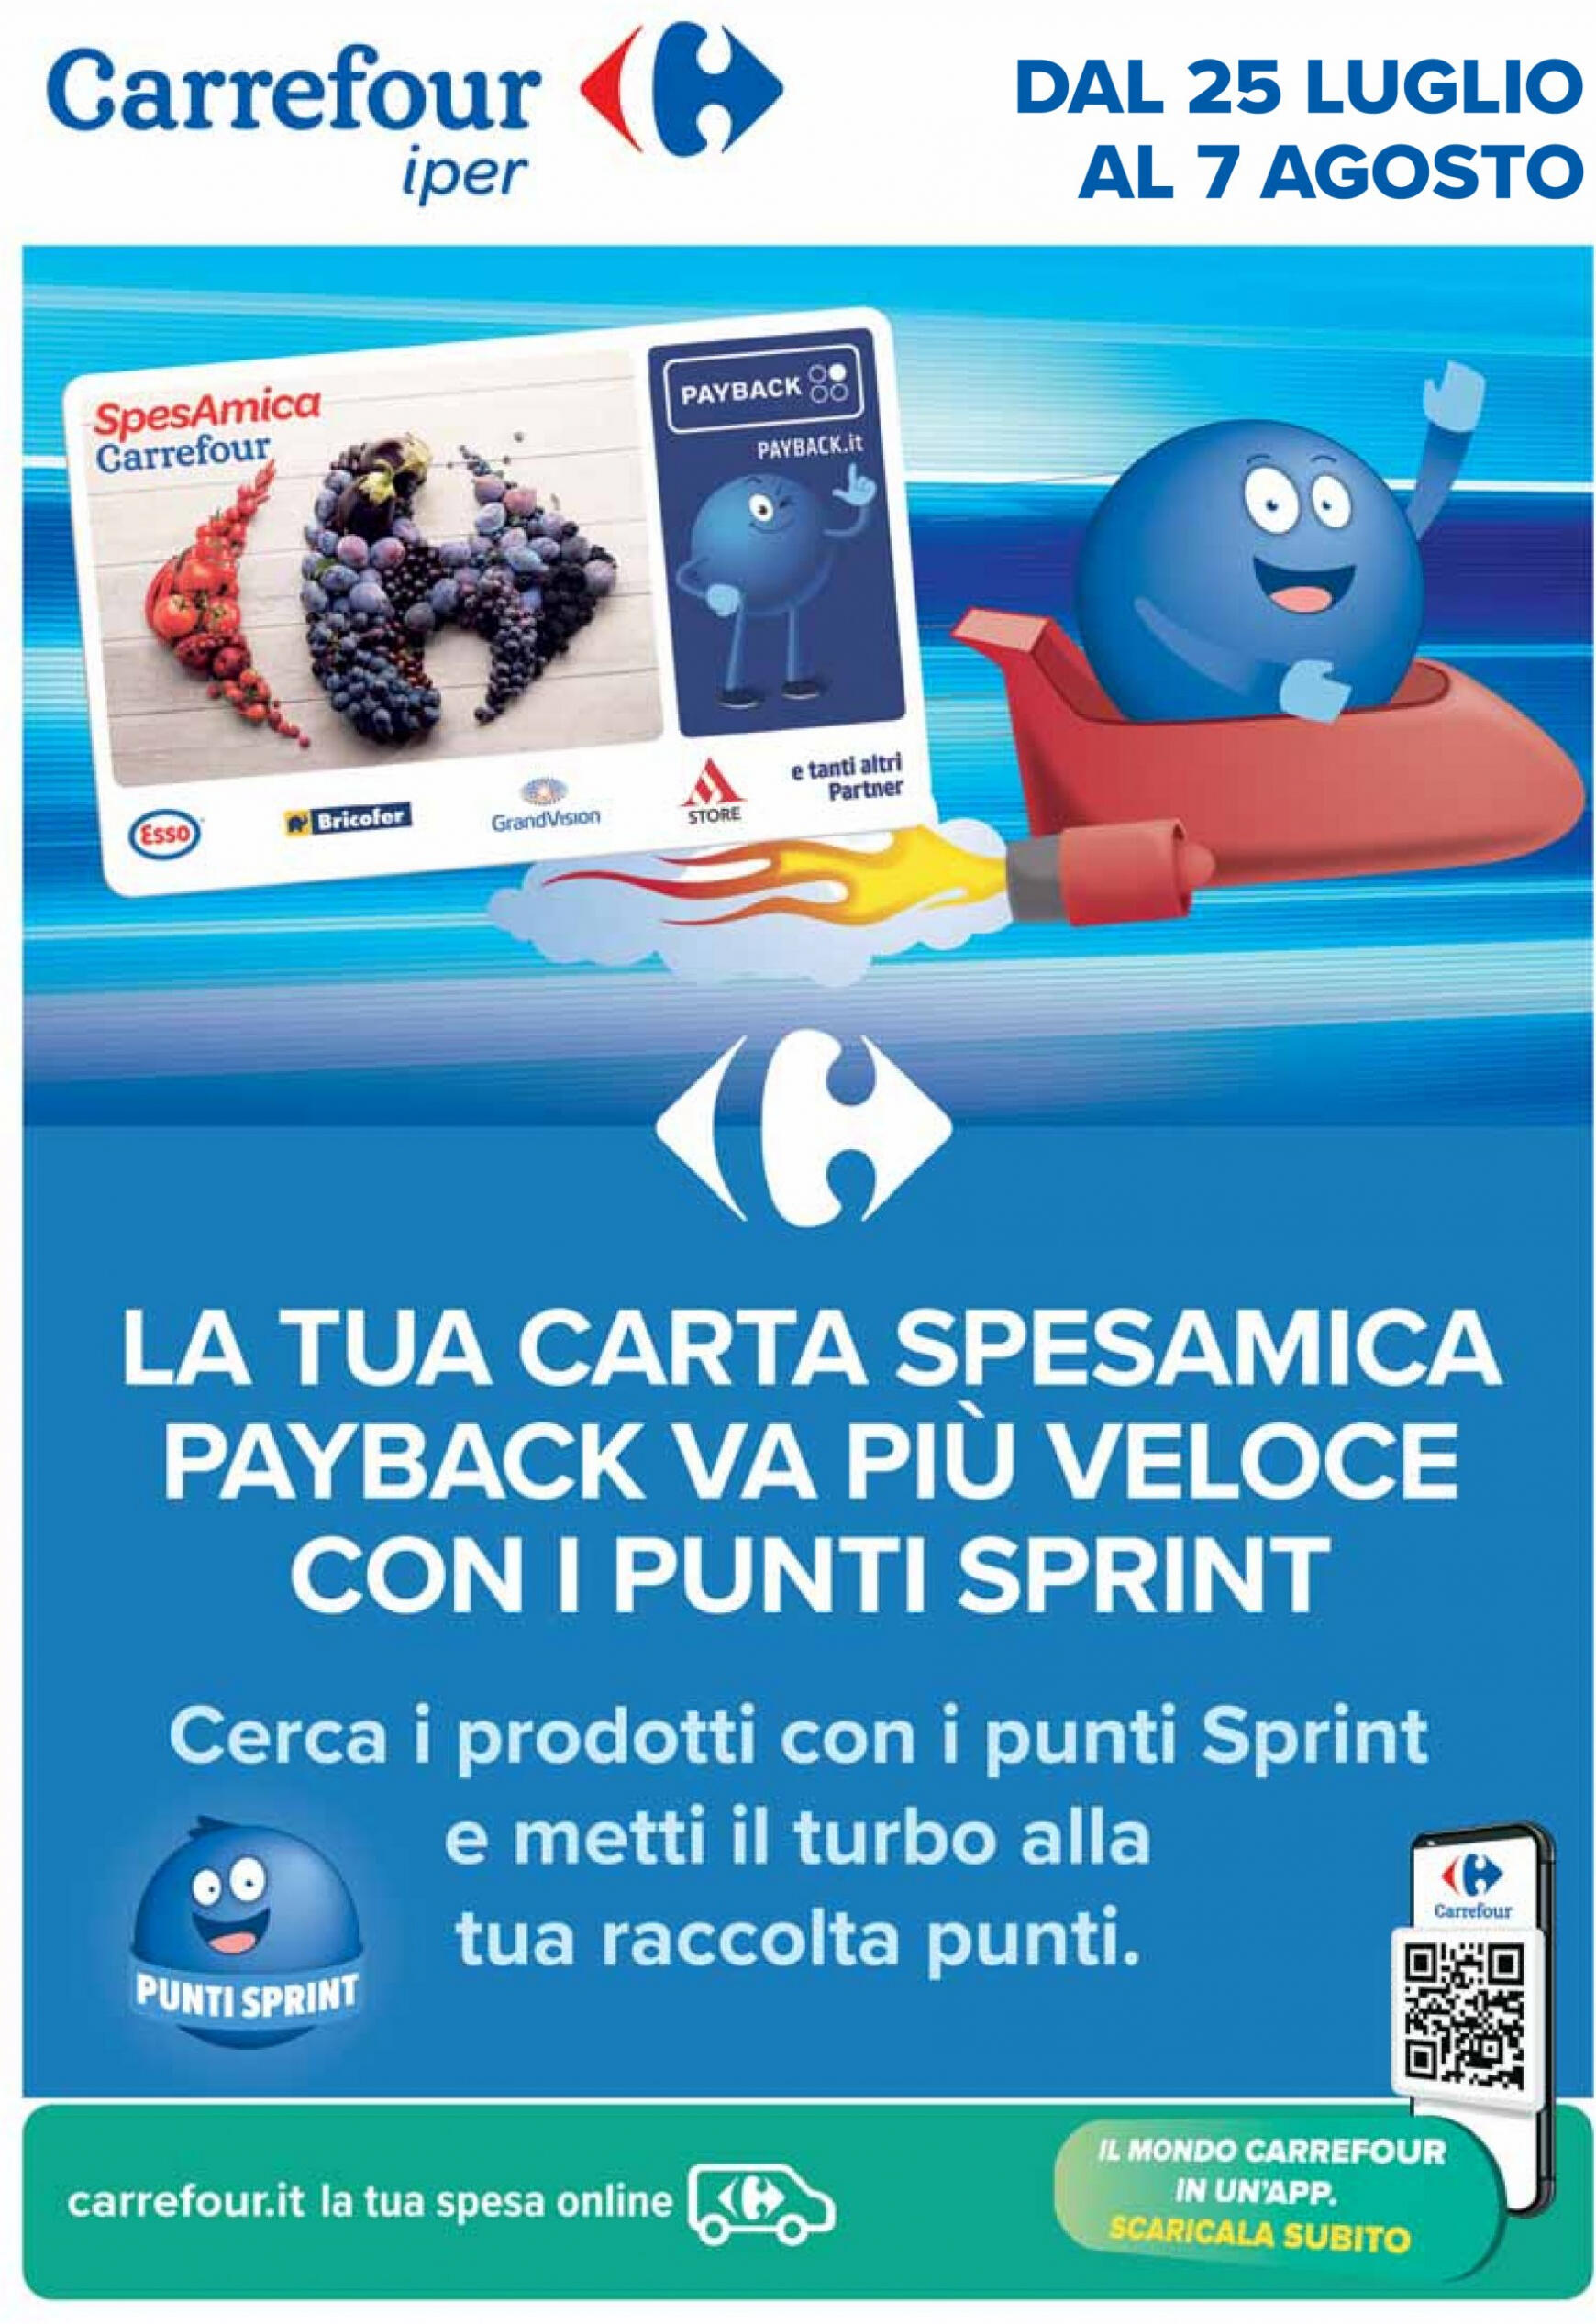 carrefour - Nuovo volantino Carrefour - Punti Sprint Payback 25.07. - 07.08.